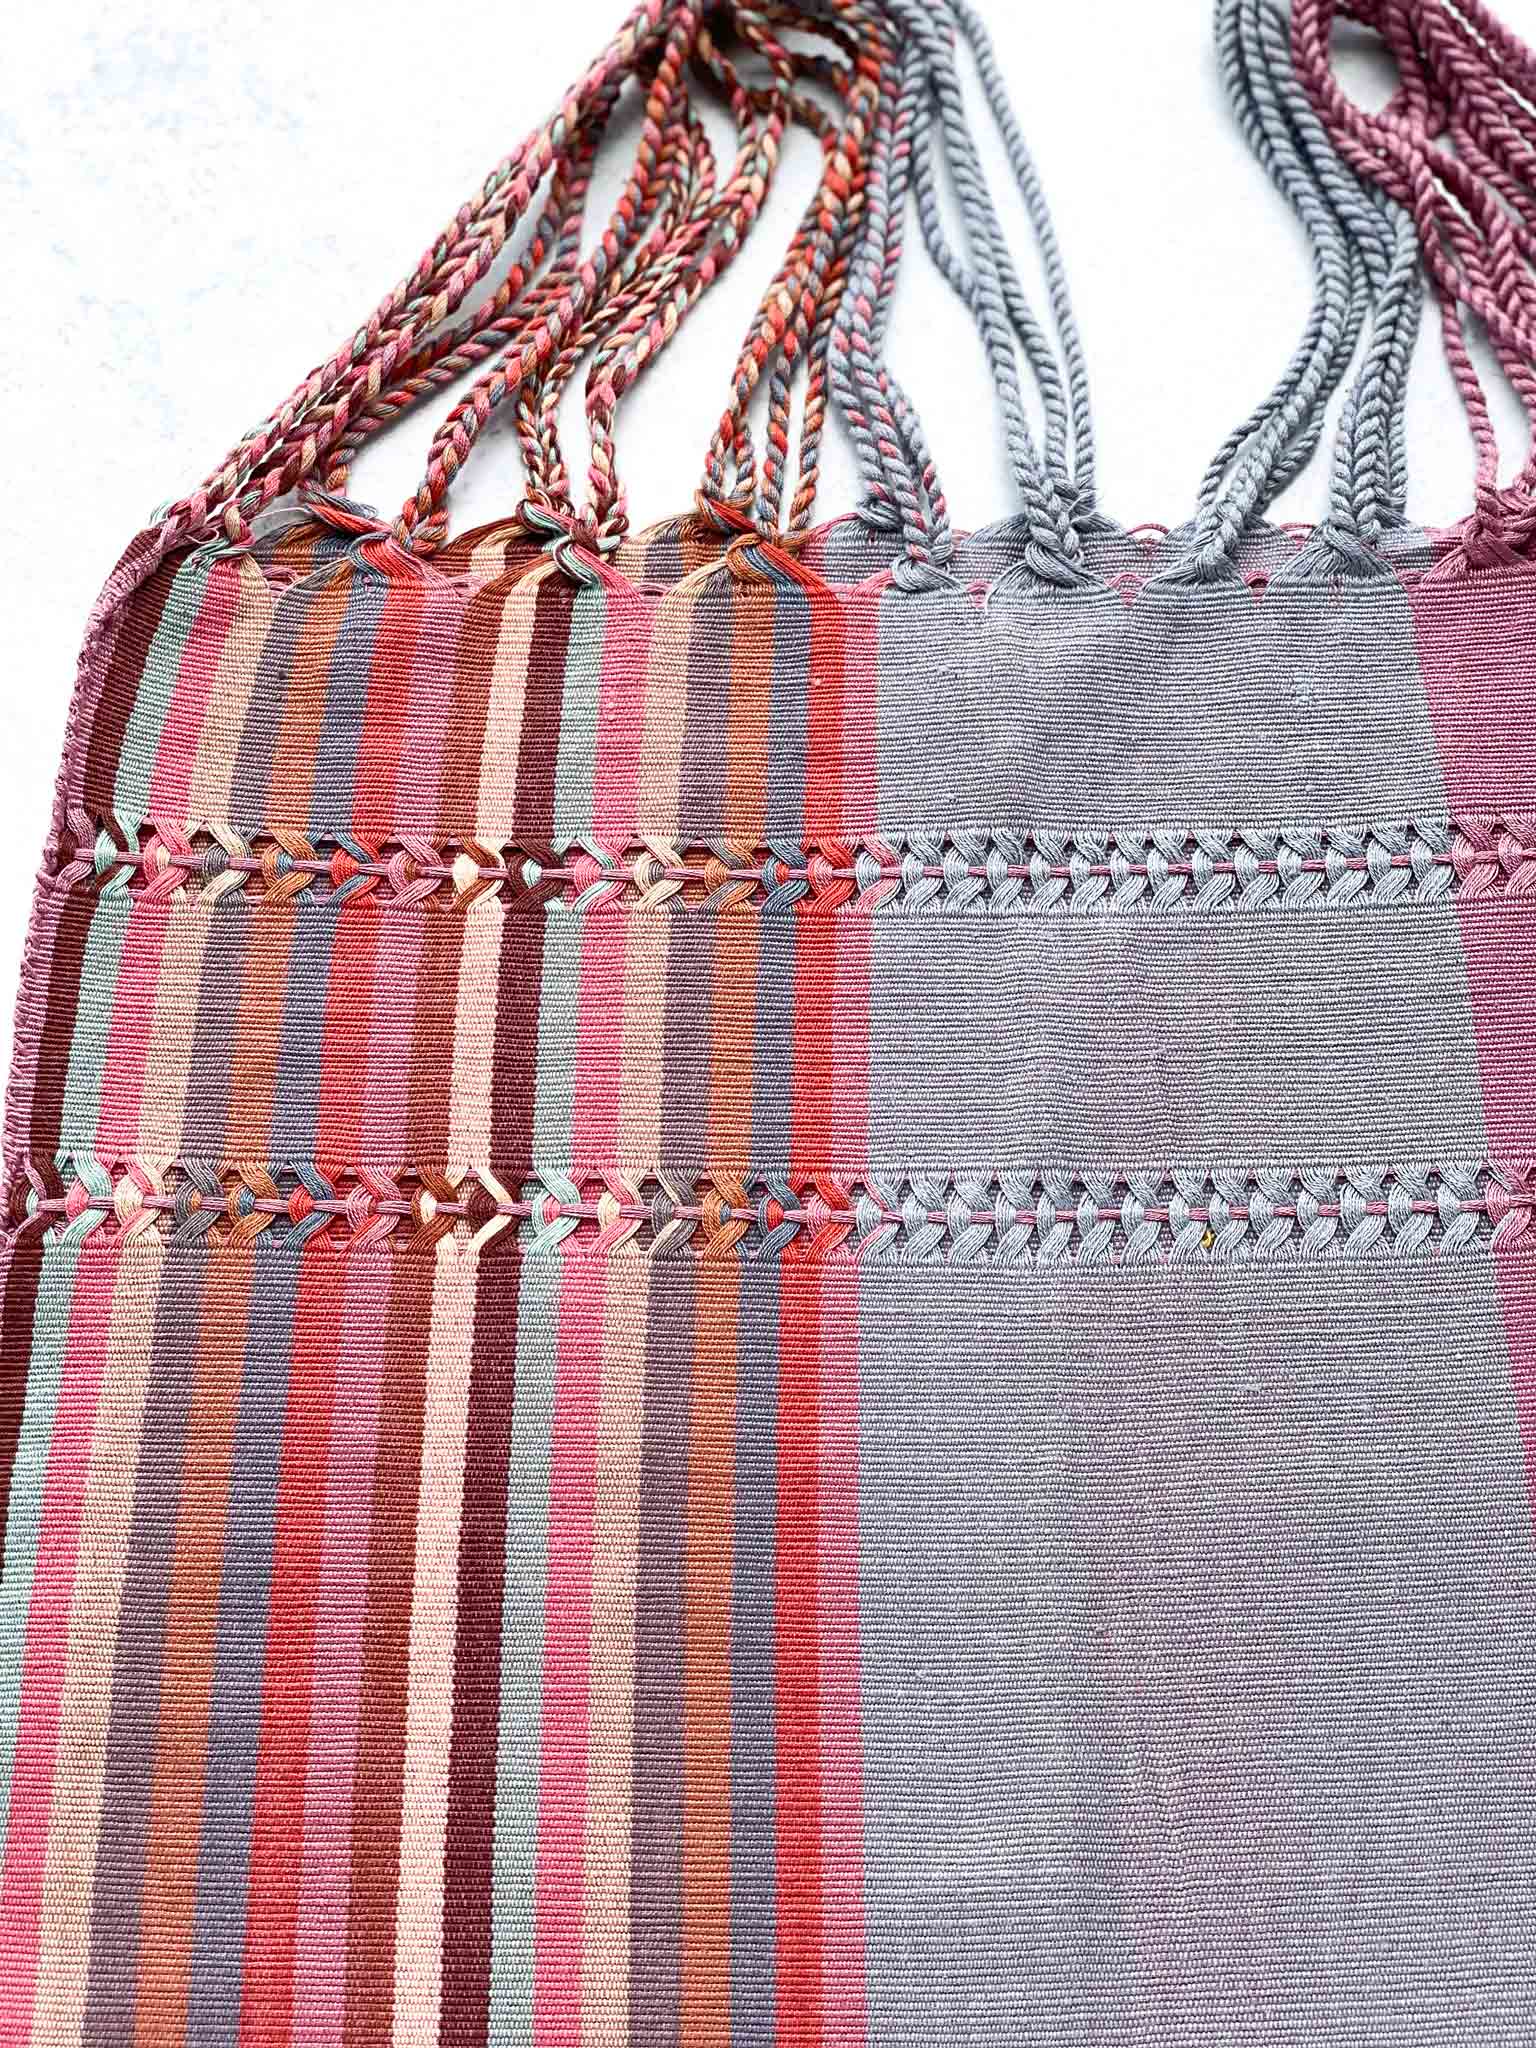 Handwoven-Loom-Tote-Bag-in-Light-Steel-Rainbow-Stripes